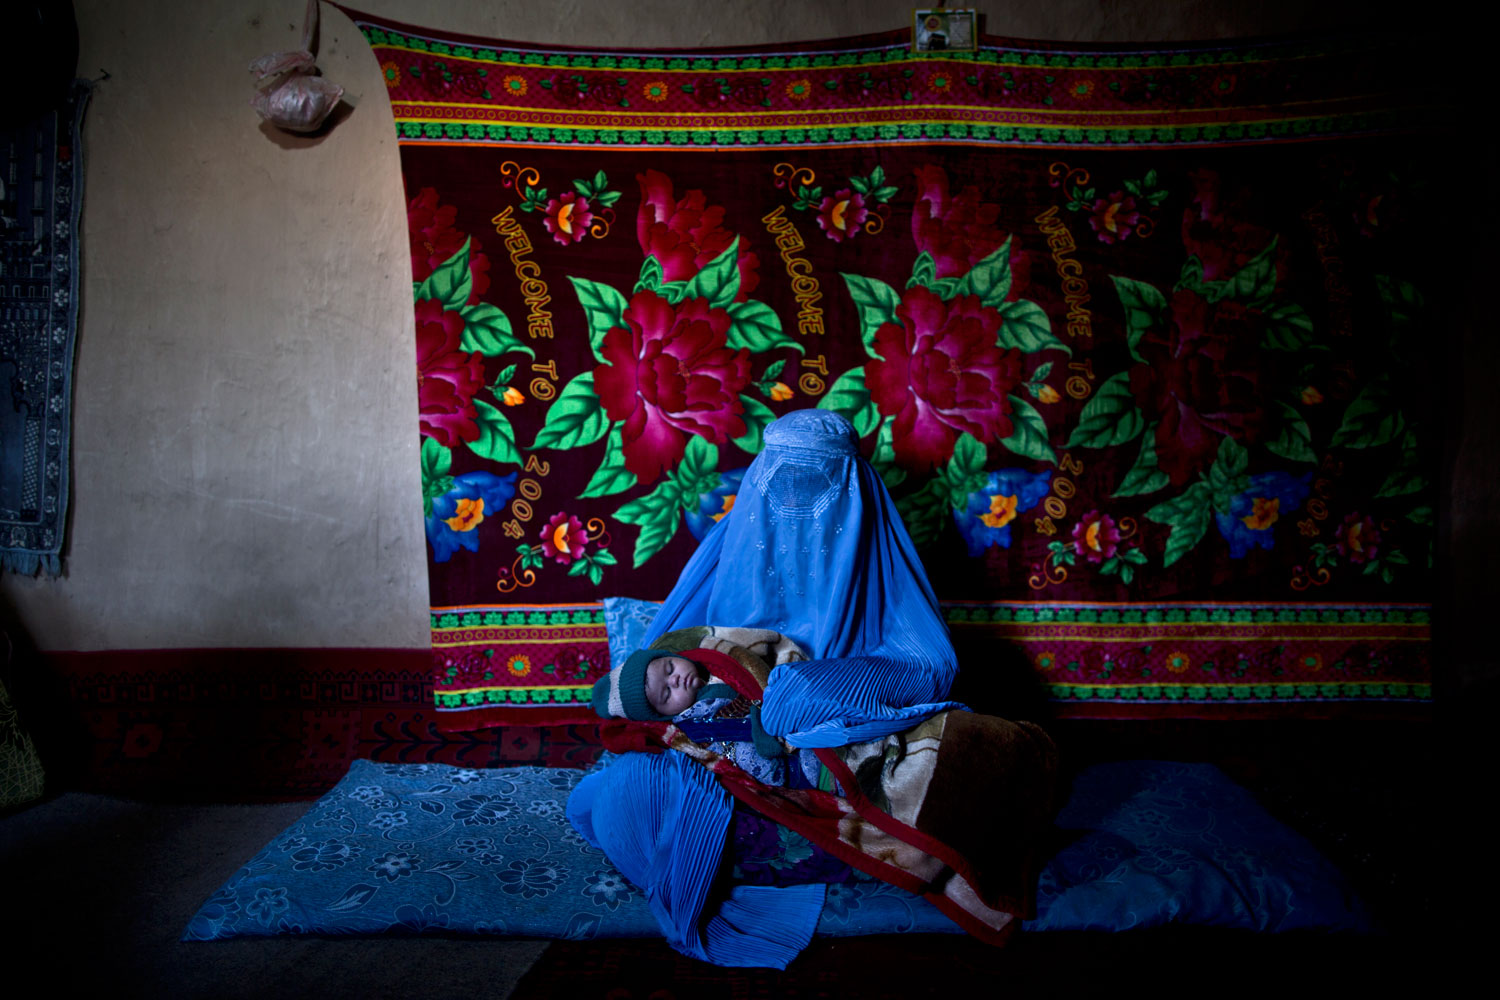 Pakistan Afghan Refugee Mothers